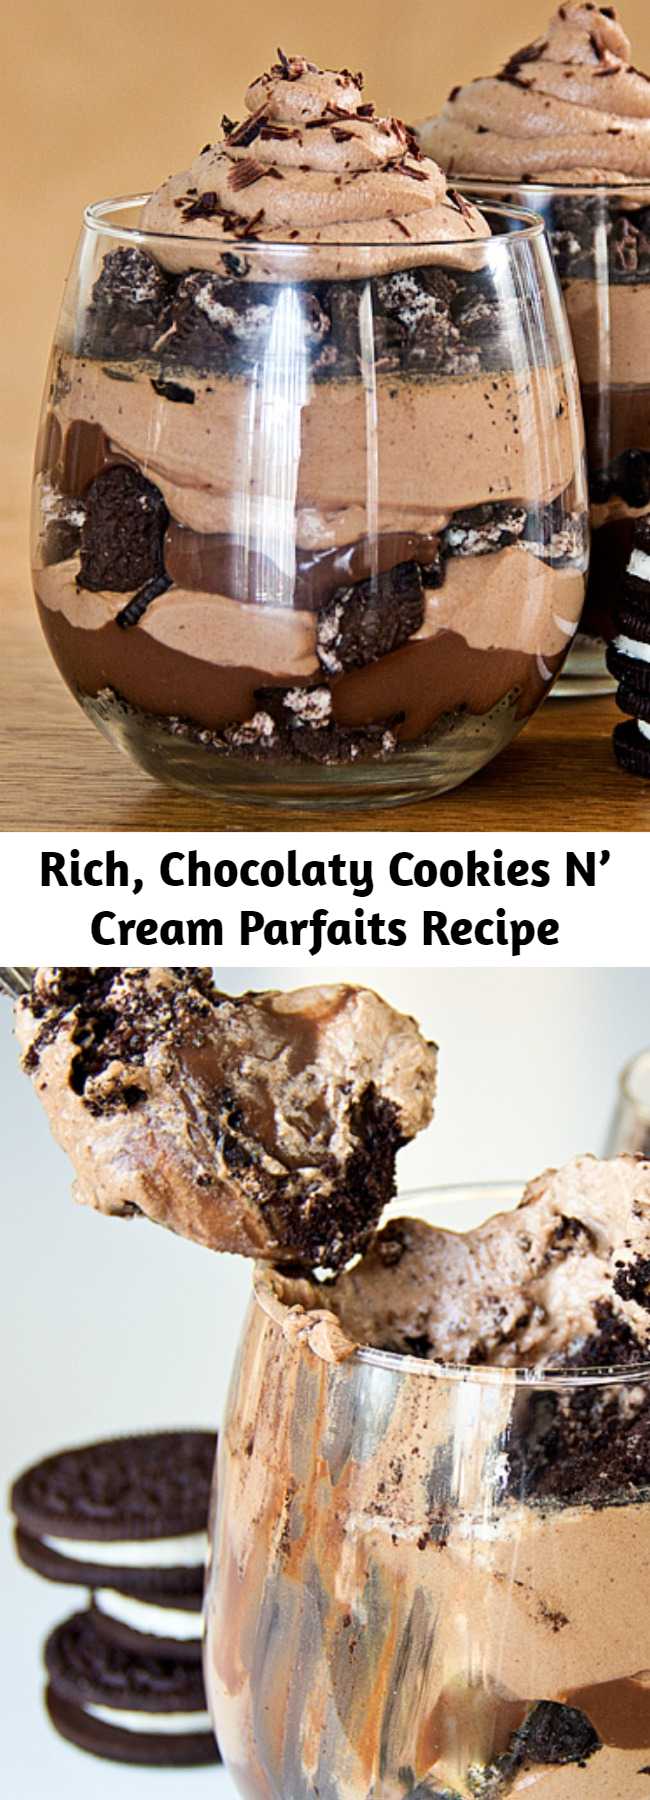 Rich, Chocolaty Cookies N’ Cream Parfaits Recipe